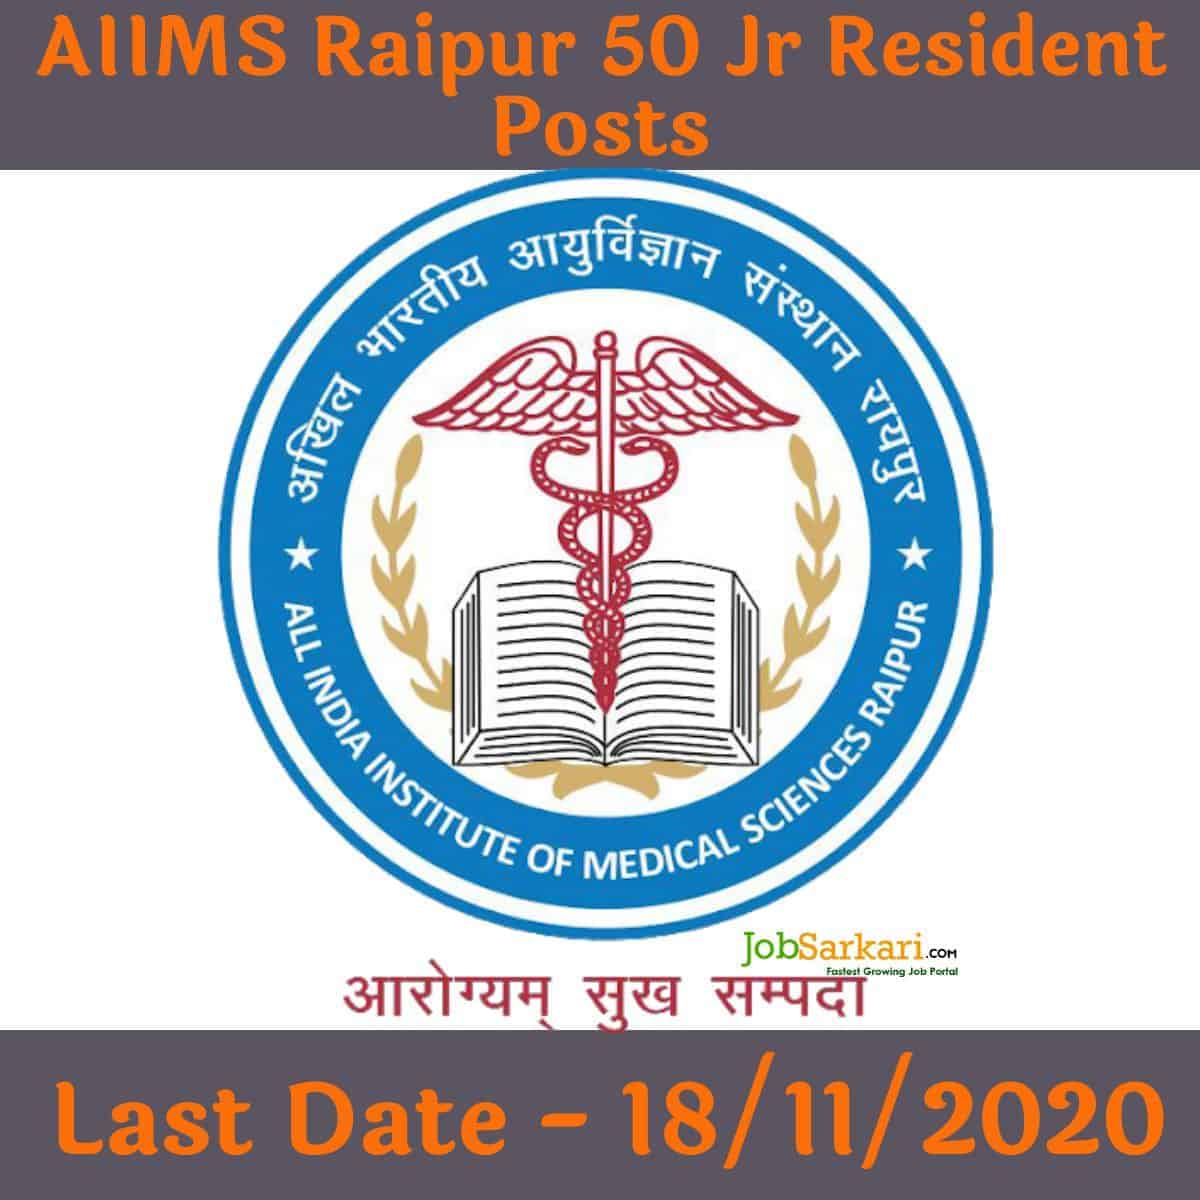 AIIMS Raipur 50 Jr Resident Posts